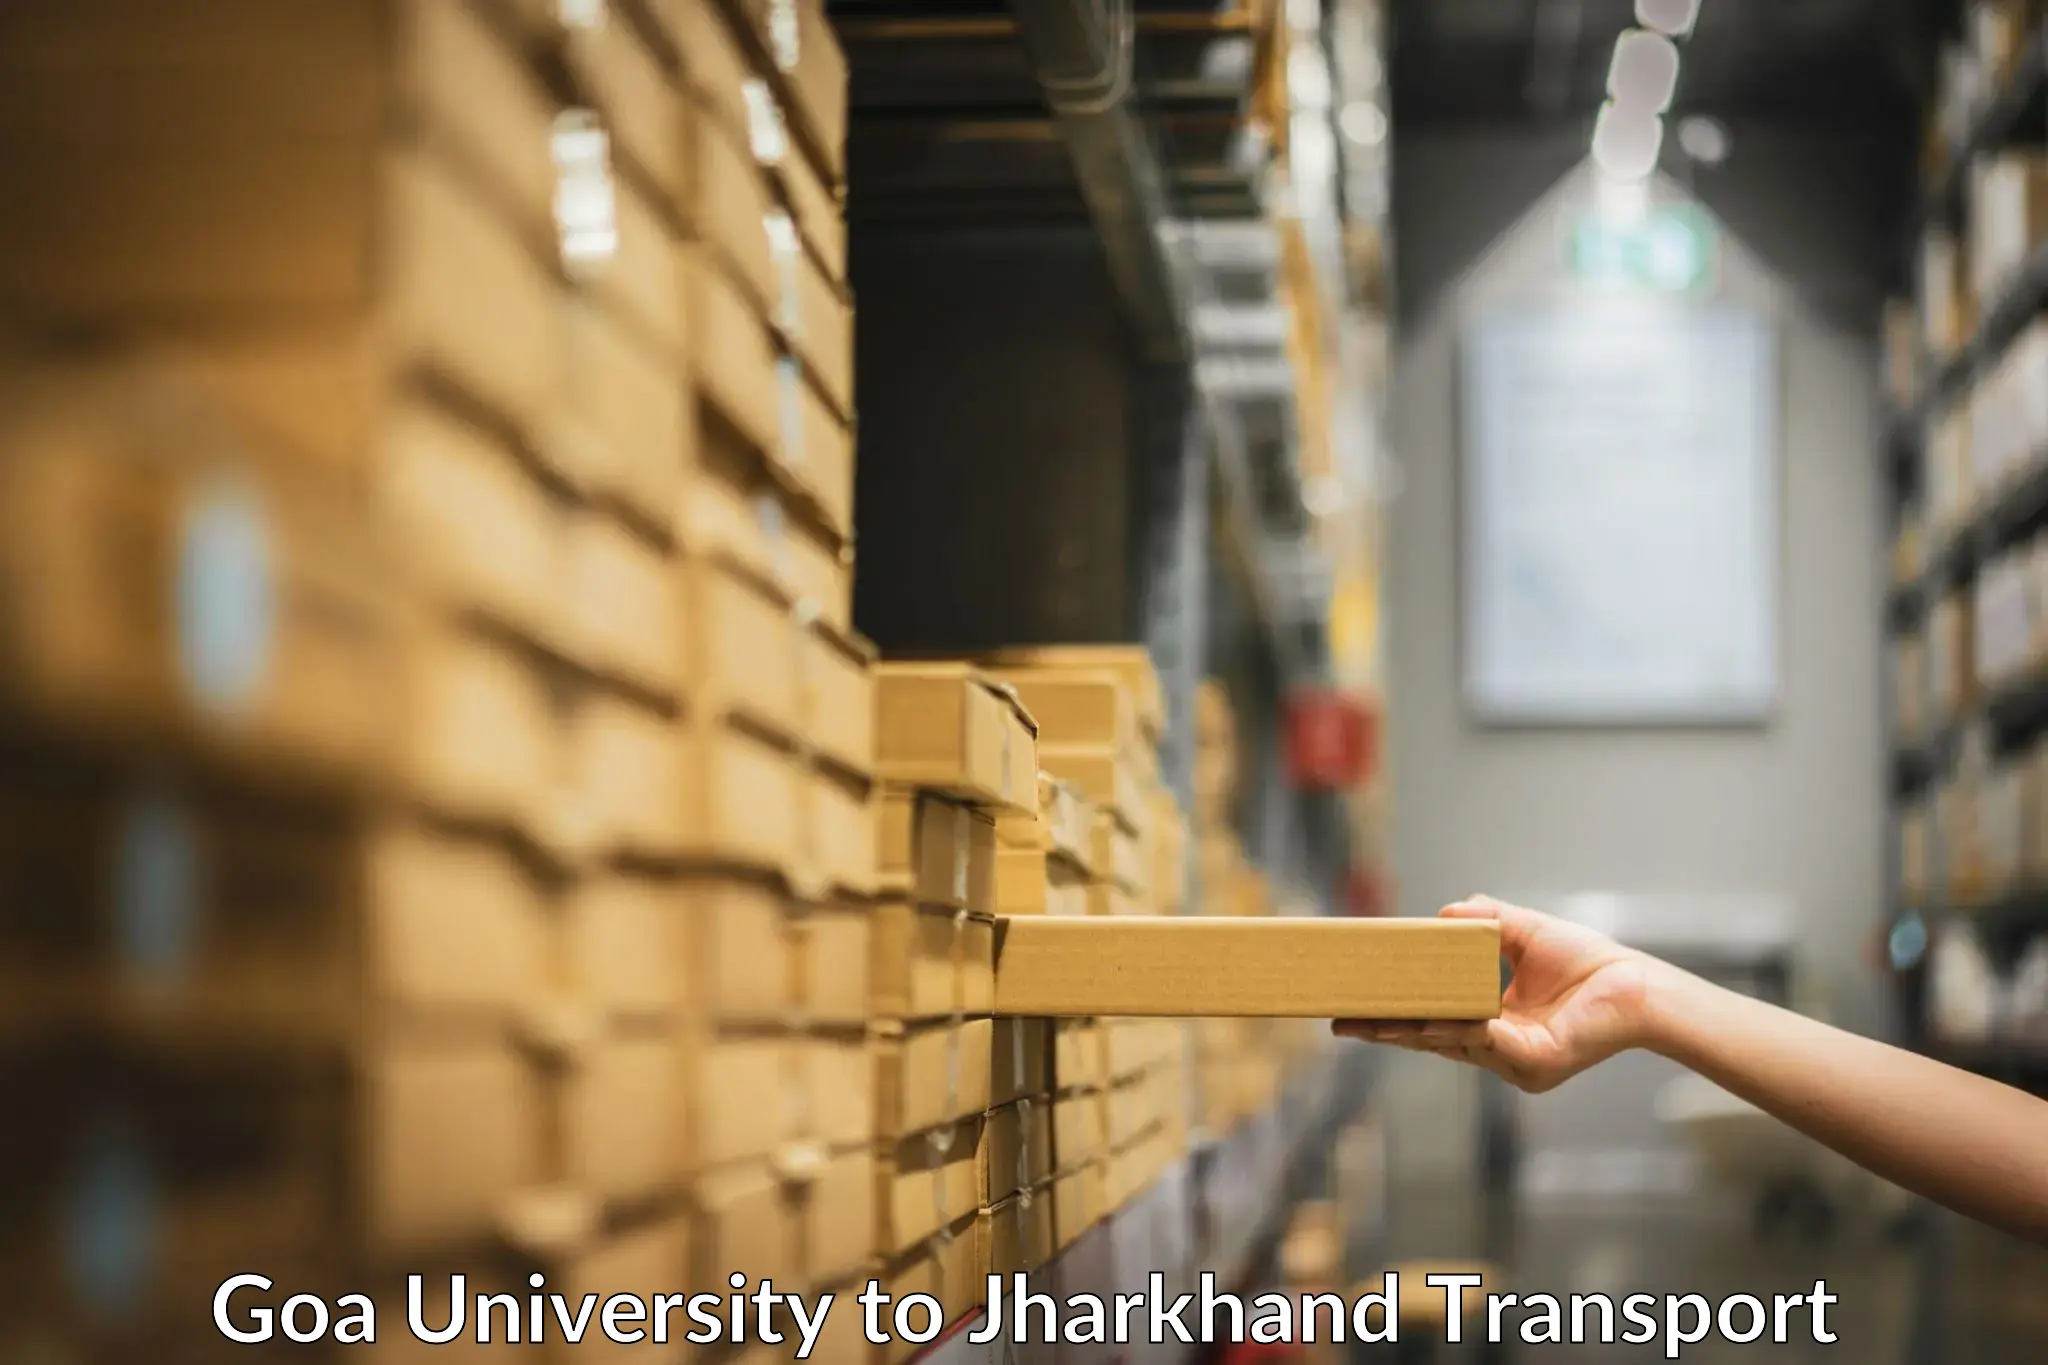 Online transport service Goa University to Jharkhand